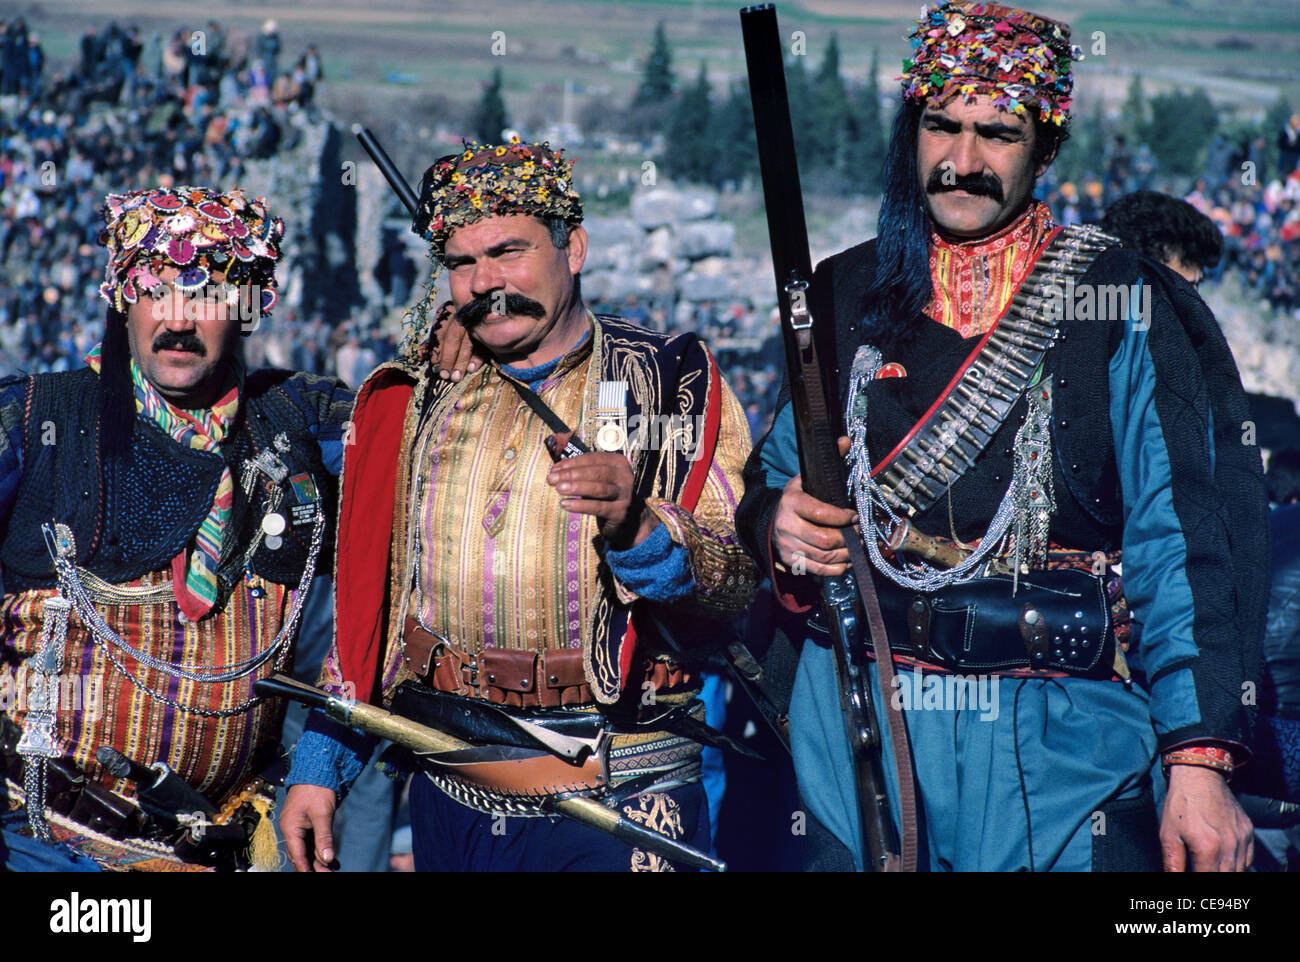 Three Turks, known as Zeybek, in Traditional Turkish Aegean Military or Folkloric Costume, Camel Wrestling Festival, Ephesus Selcuk Turkey Stock Photo